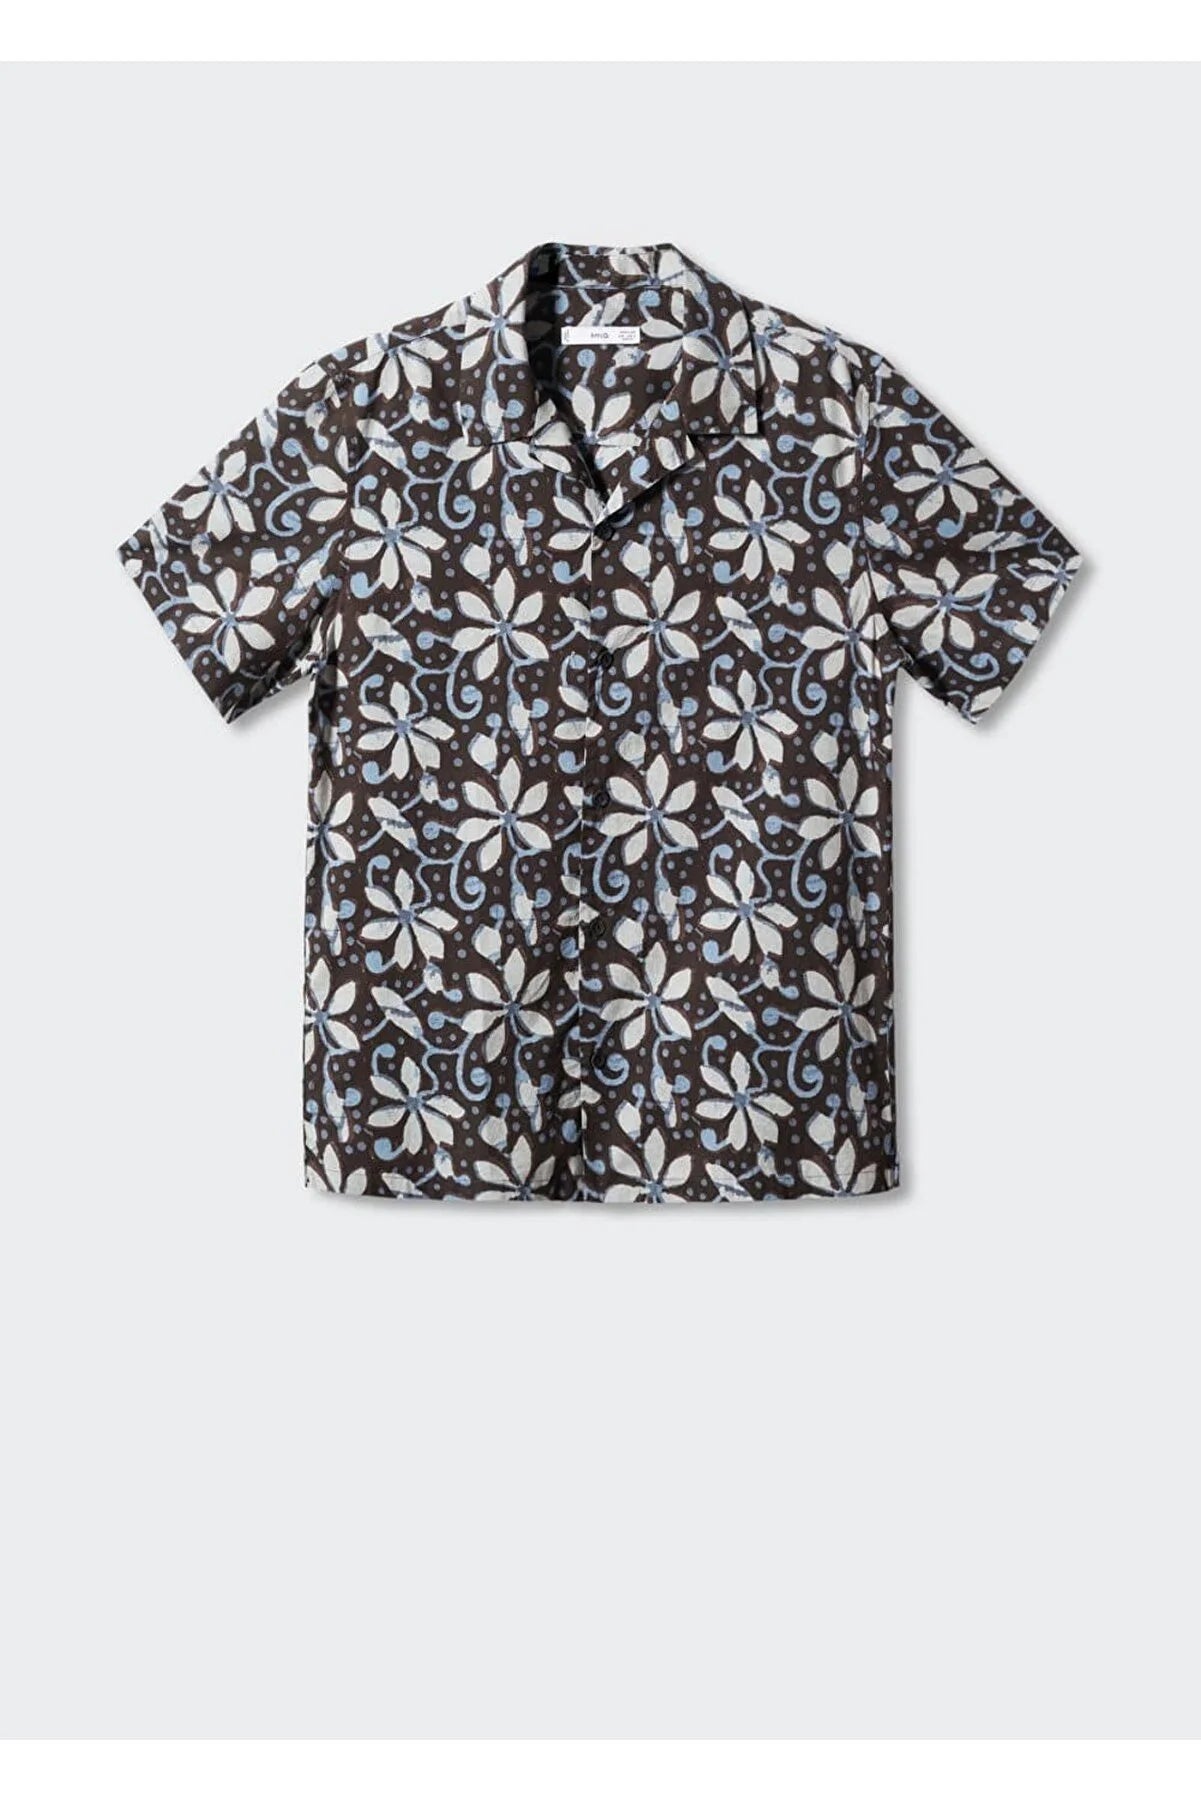 Mango Men's Patterned Bowling Collar Shirt